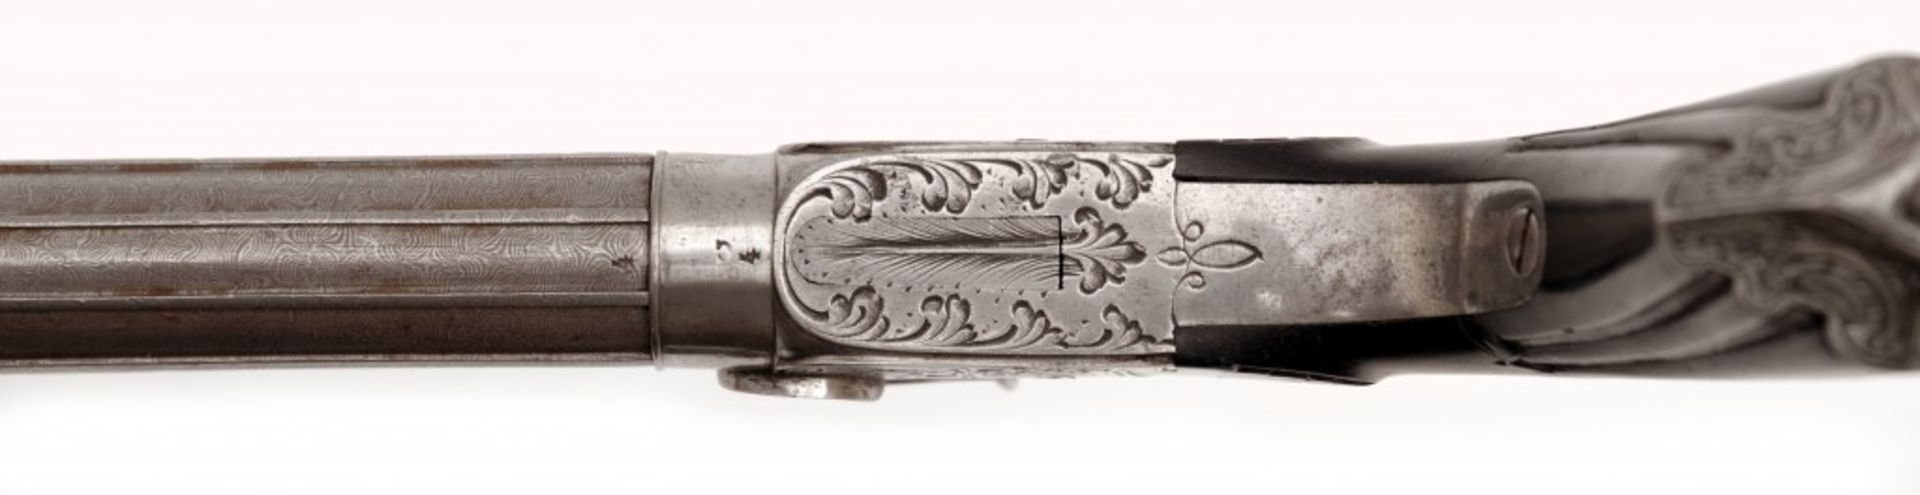 A Percussion Cap Pocket Pistol with Long Barrel - Image 11 of 14